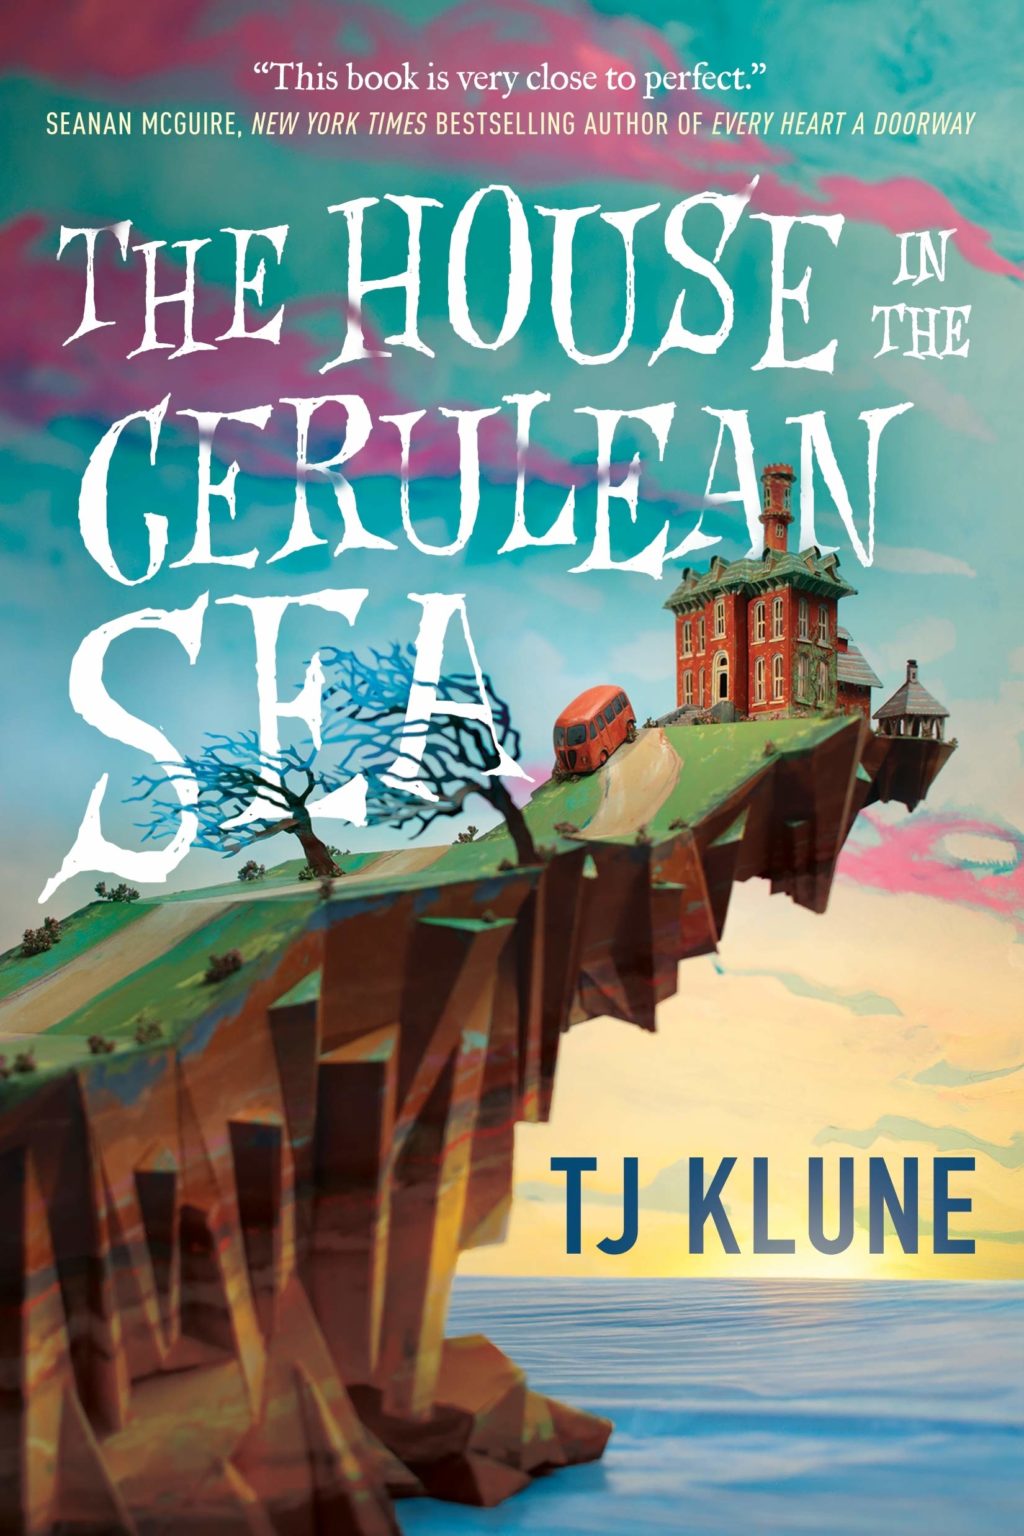 tj klune house in the cerulean sea